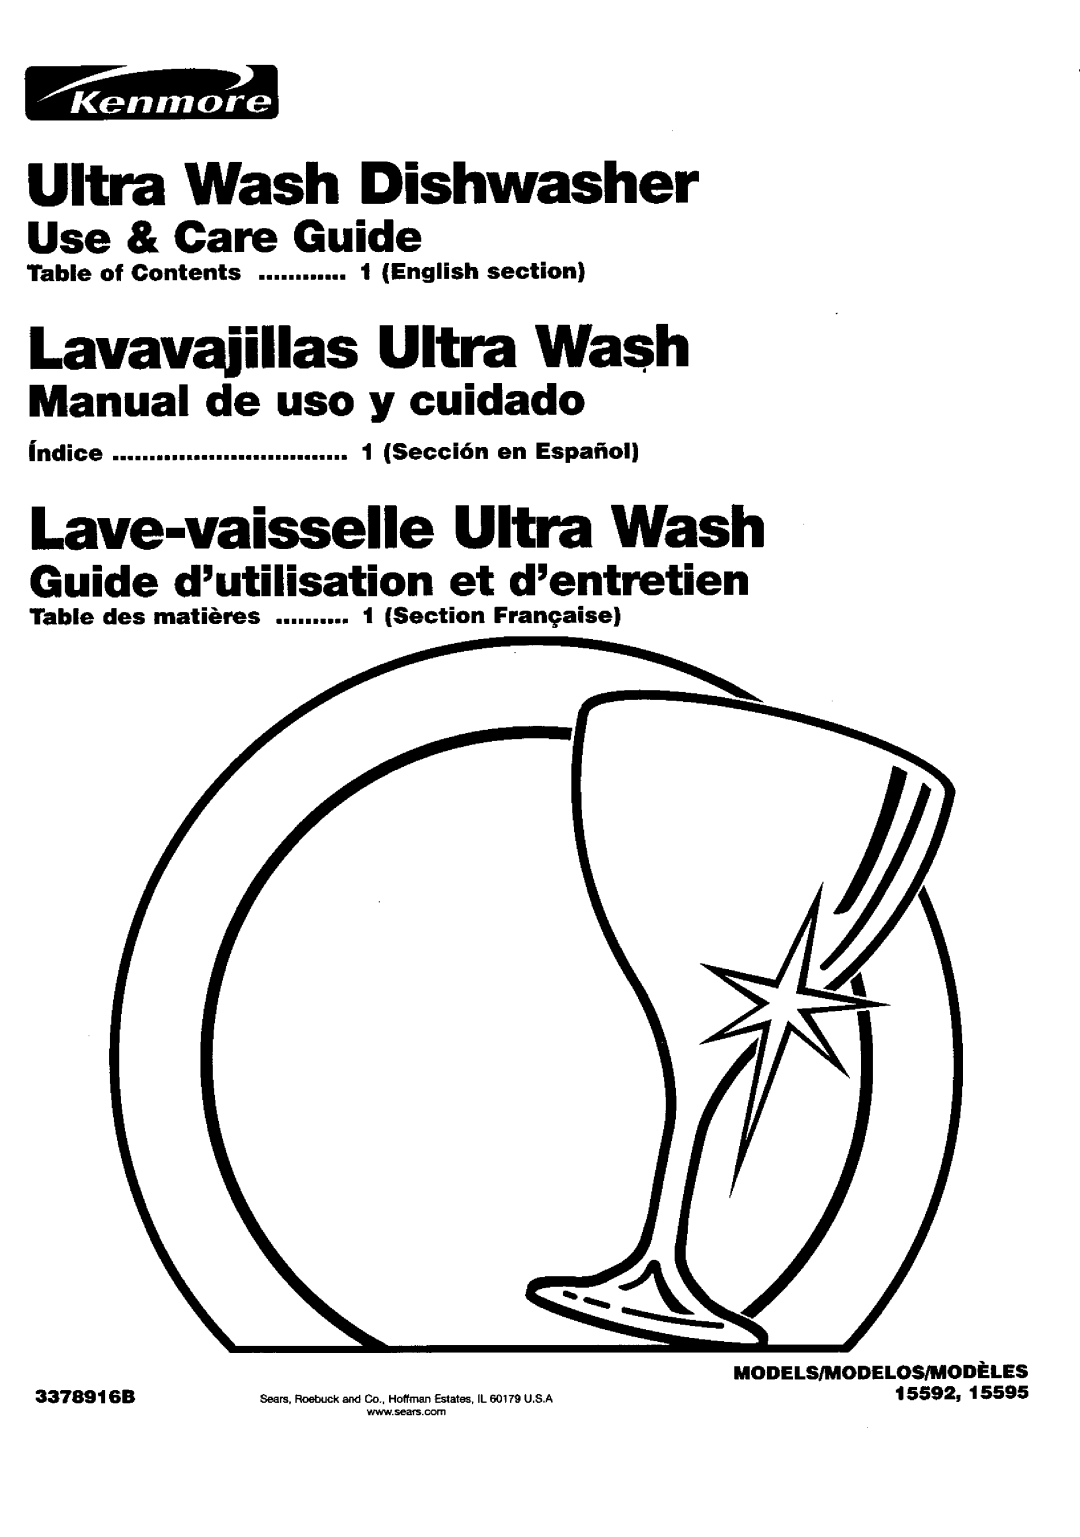 Kenmore 15595 manual Ultra Wash Dishwasher, Lavavajillas Ultra Wash, Lave-vaisselleUltra Wash, Use & Care Guide, English 